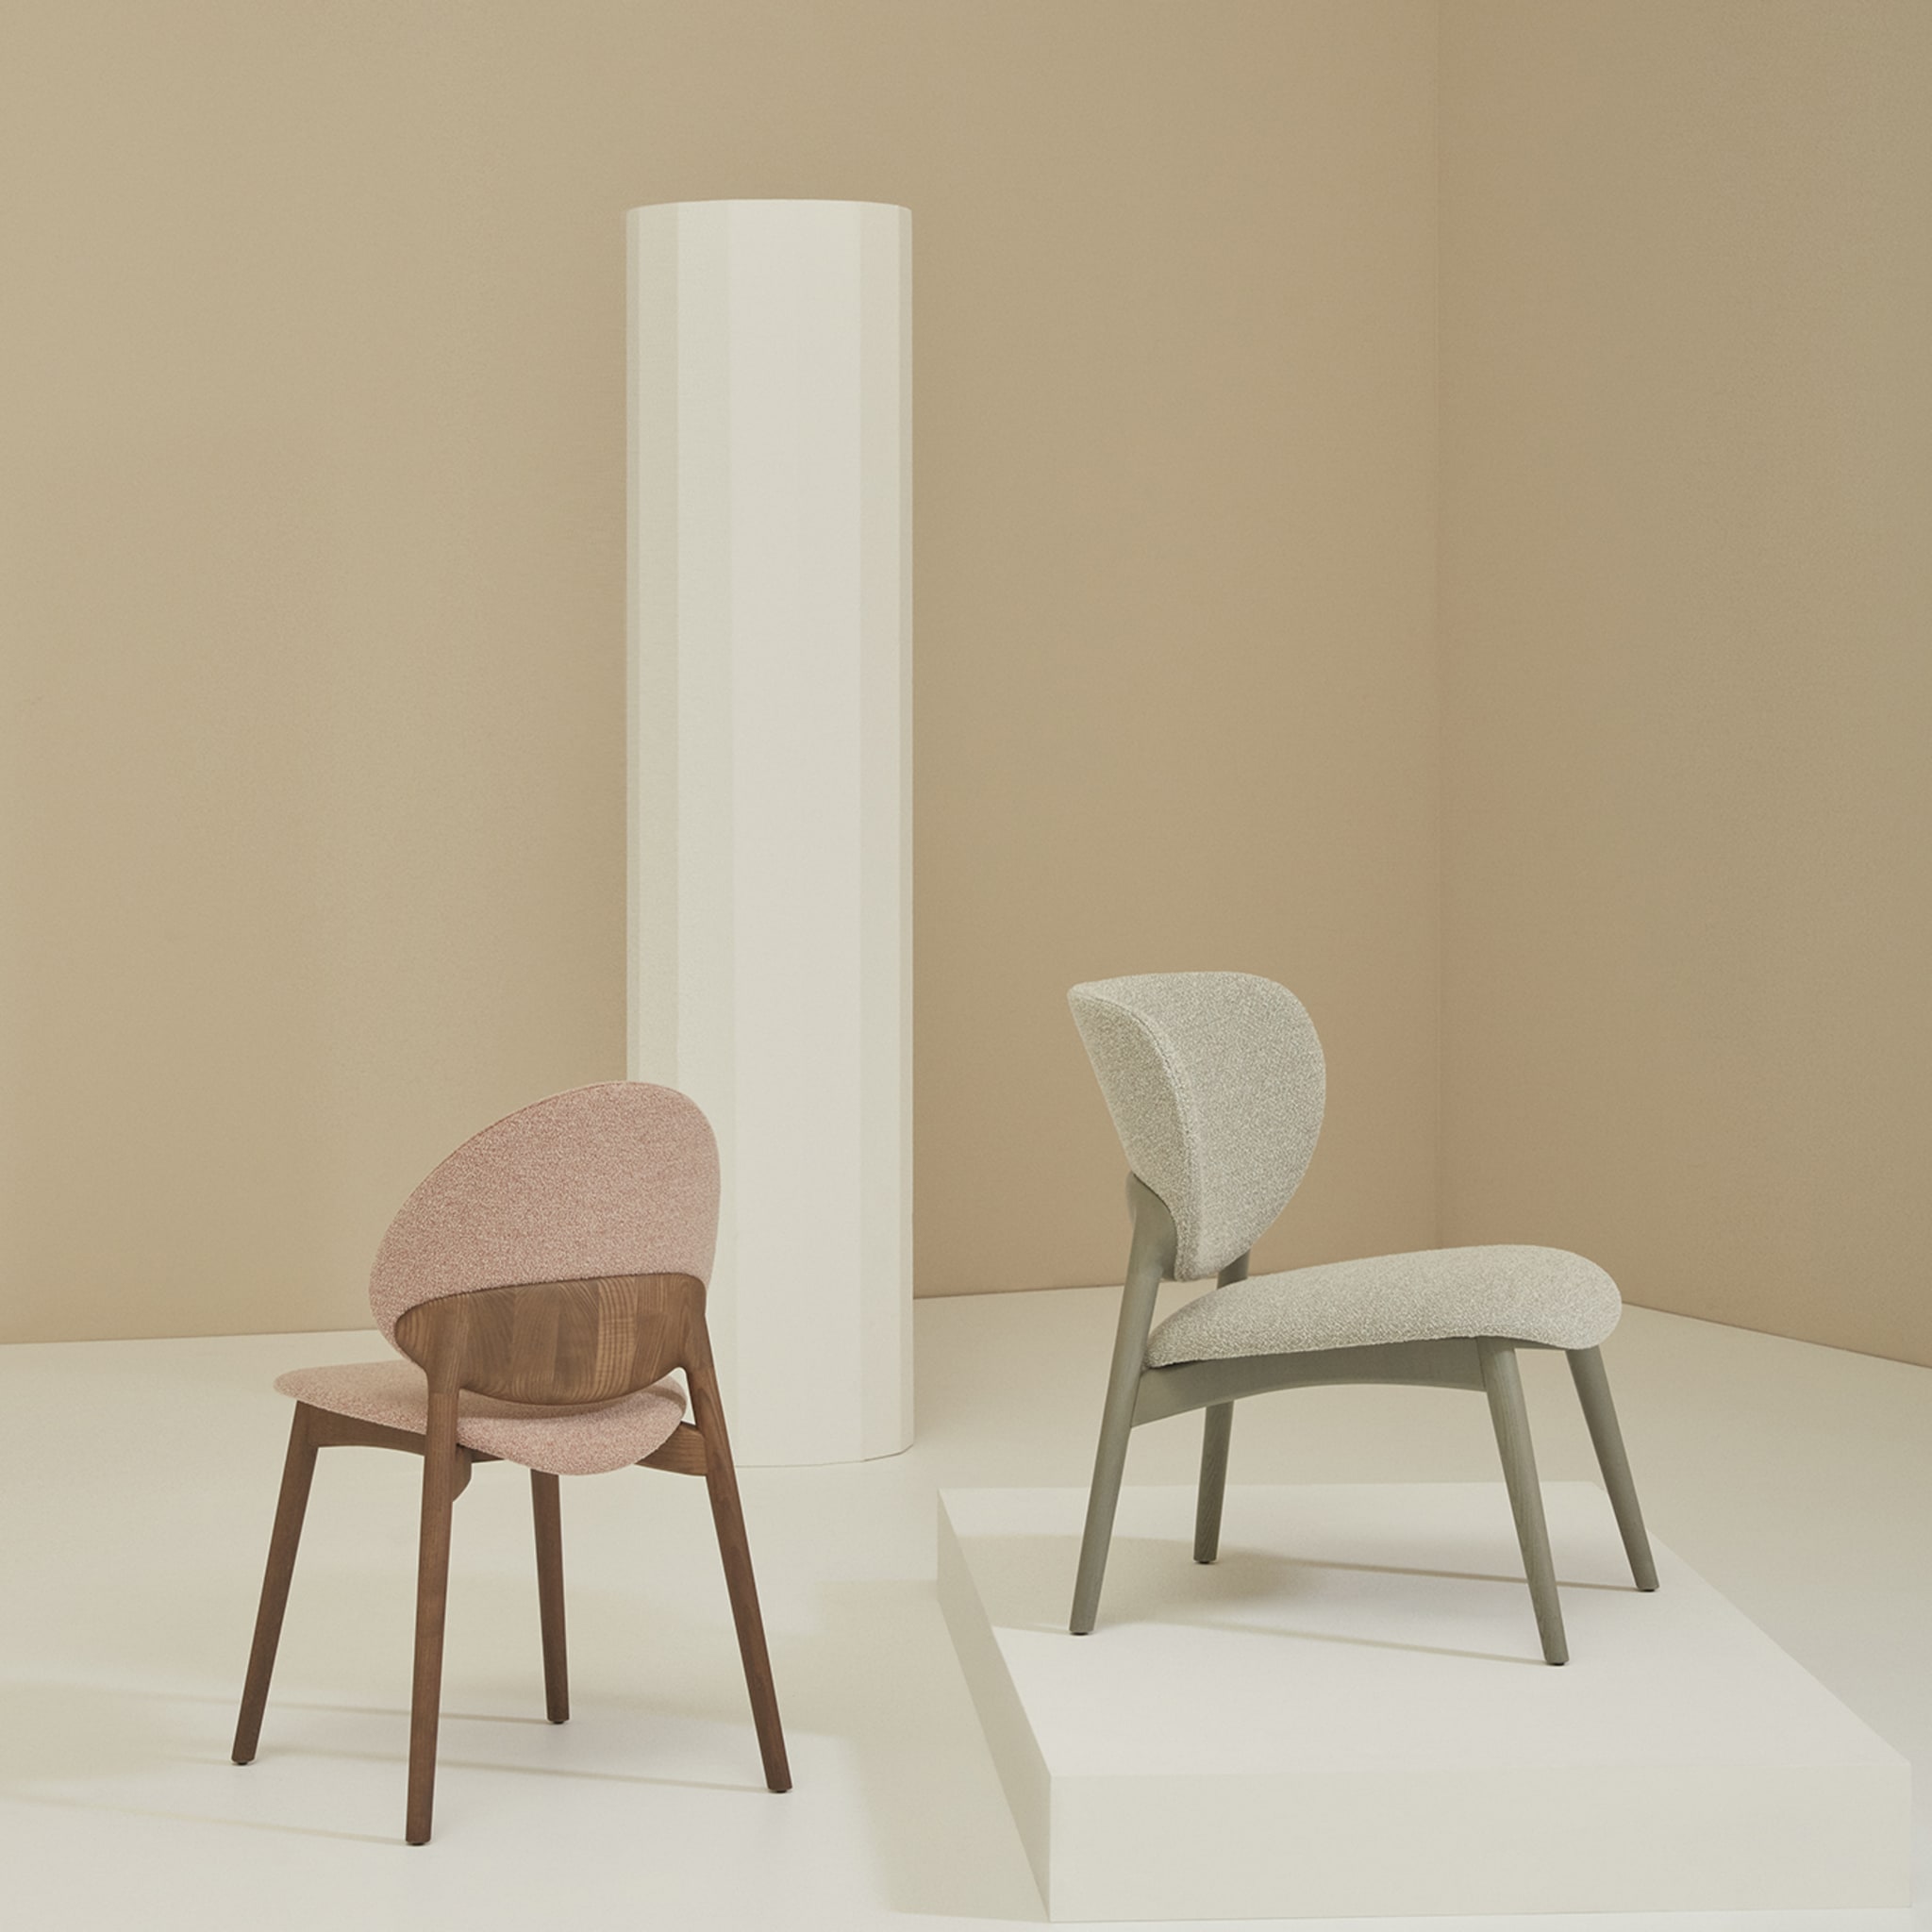 Fleuron 203 Gray Ash Lounge Chair by Constance Guisset - Alternative view 4